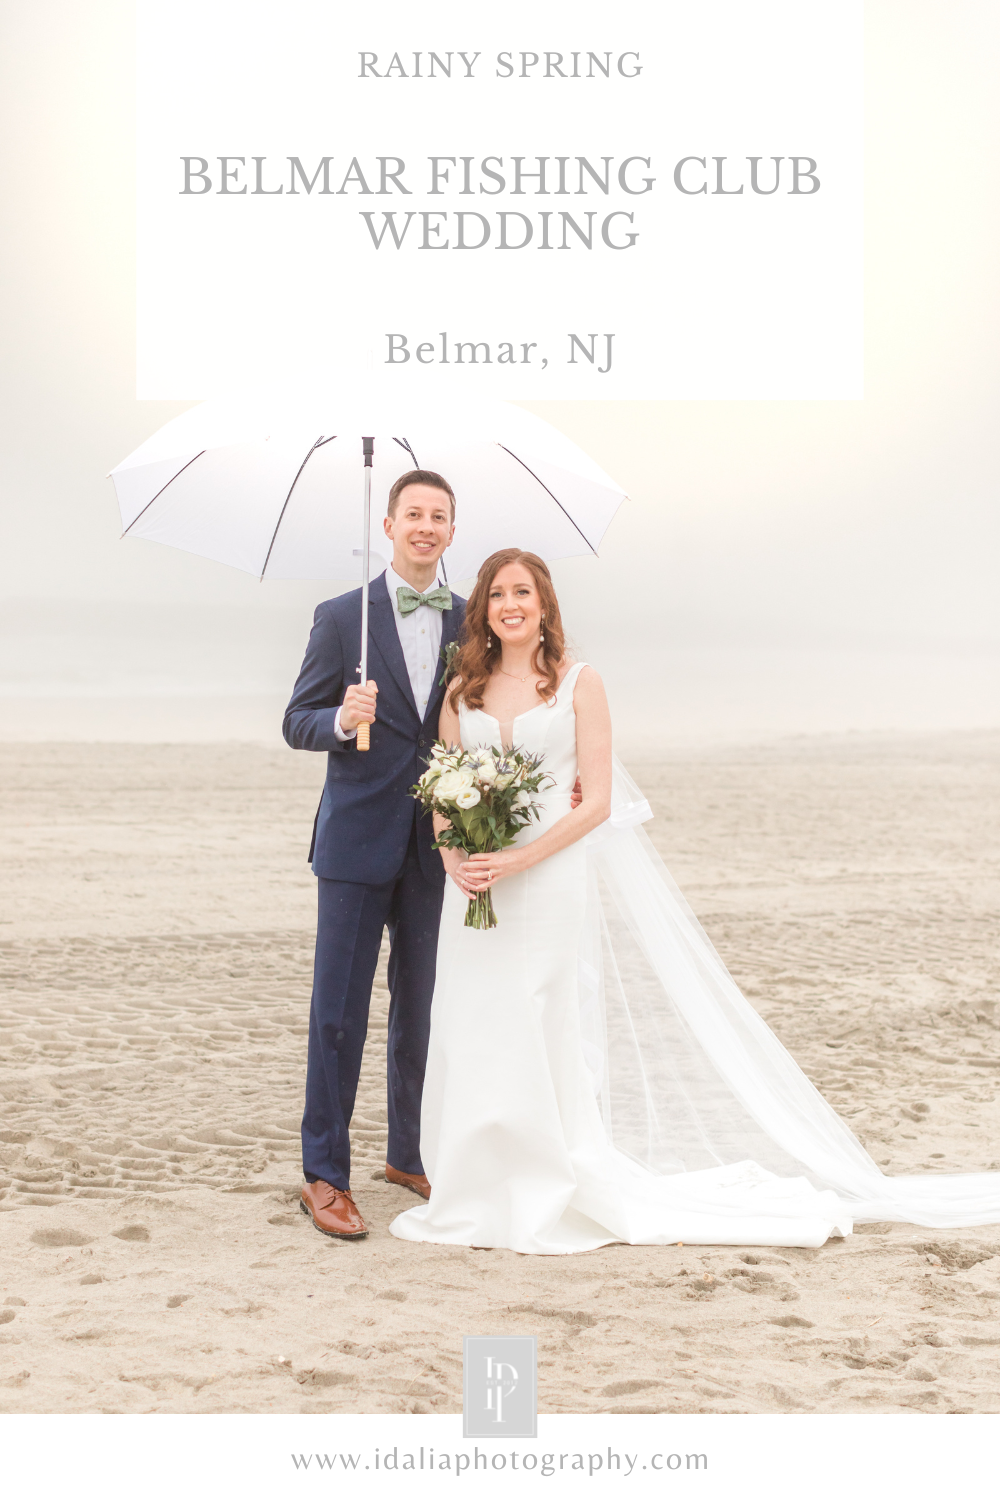 Belmar Fishing Club wedding day with foggy beach portraits in Belmar, NJ photographed by New Jersey wedding photographer Idalia Photography